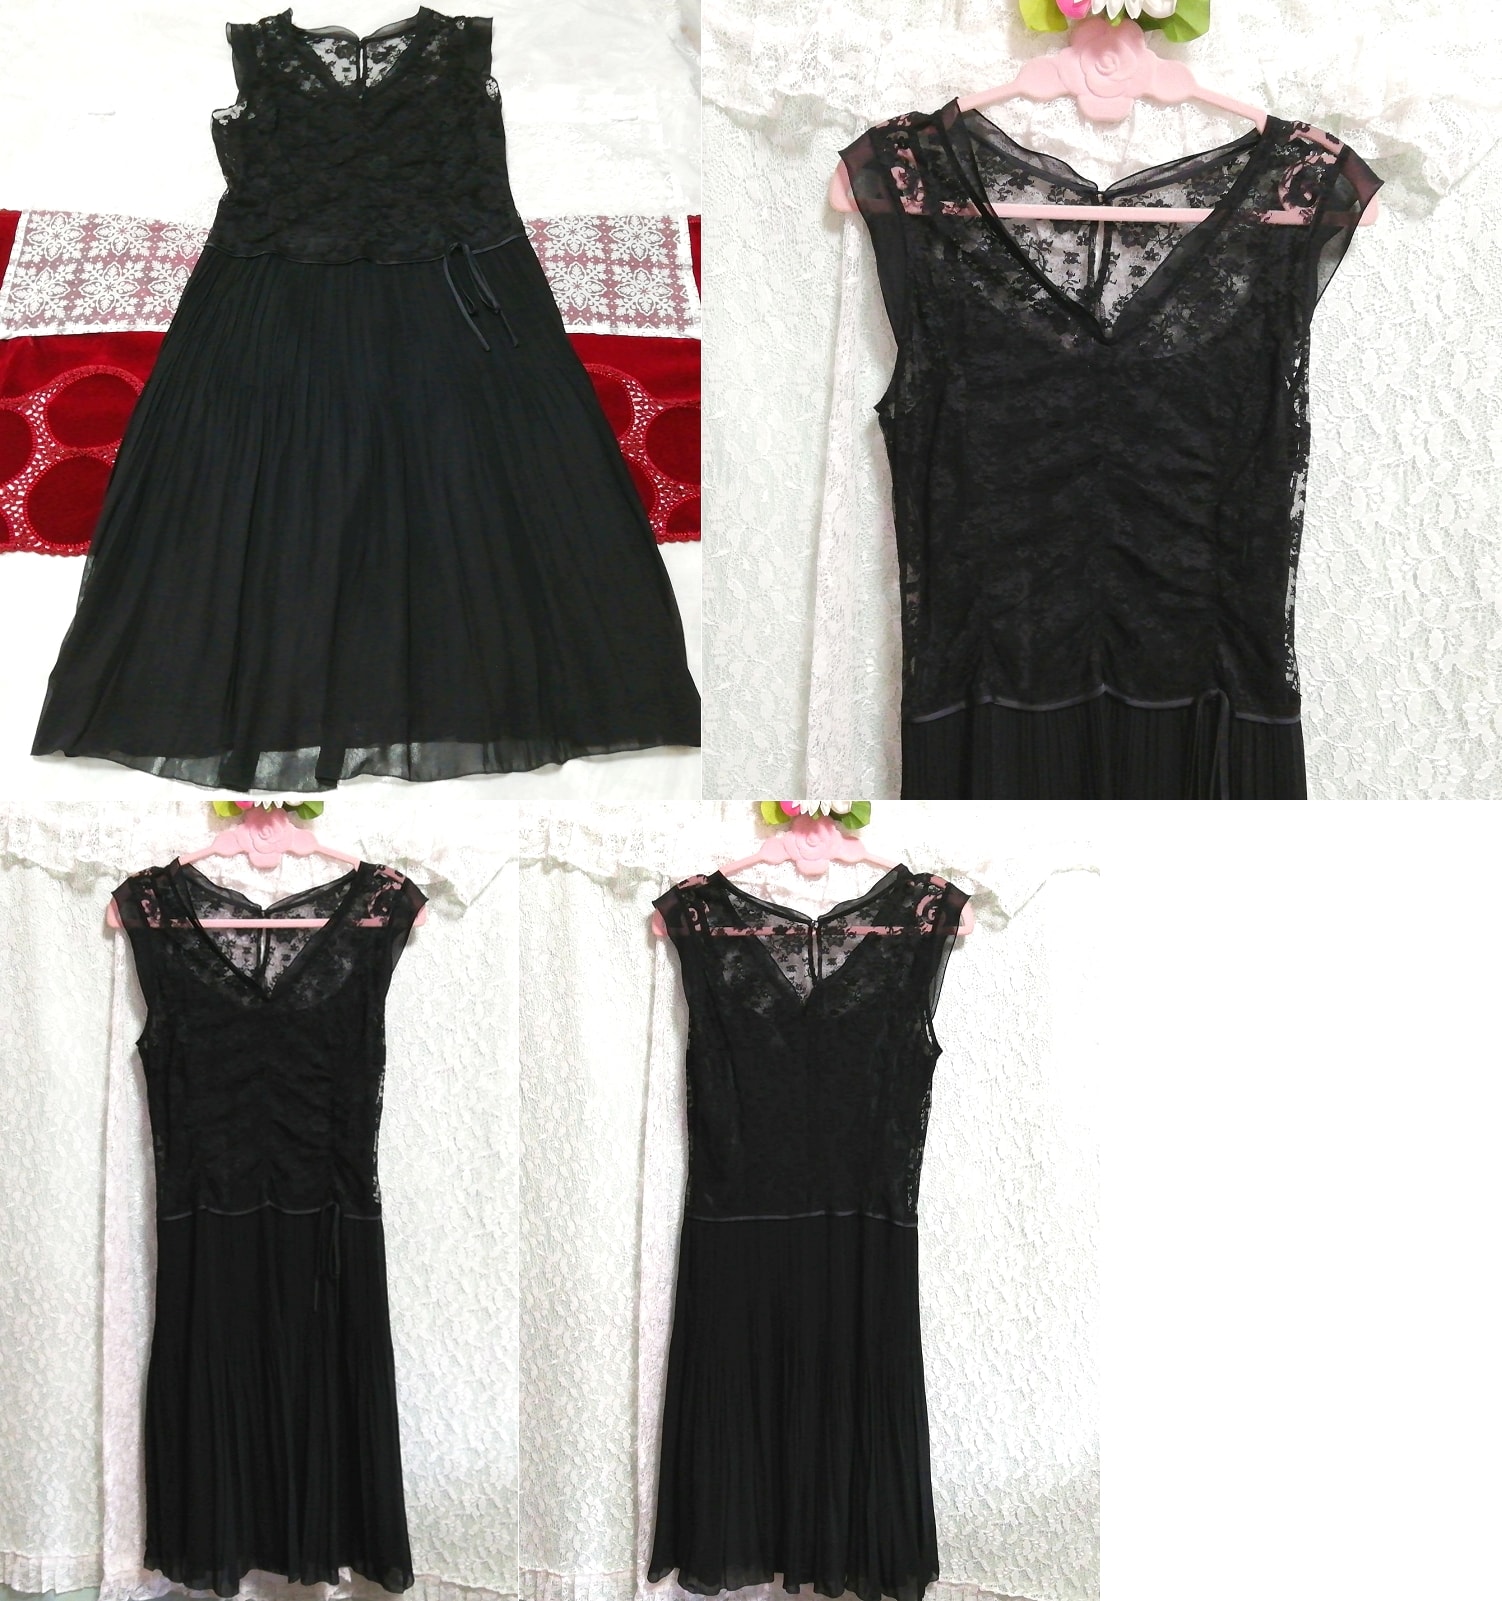 Black lace chiffon skirt negligee nightgown nightwear sleeveless dress, fashion, ladies' fashion, nightwear, pajamas